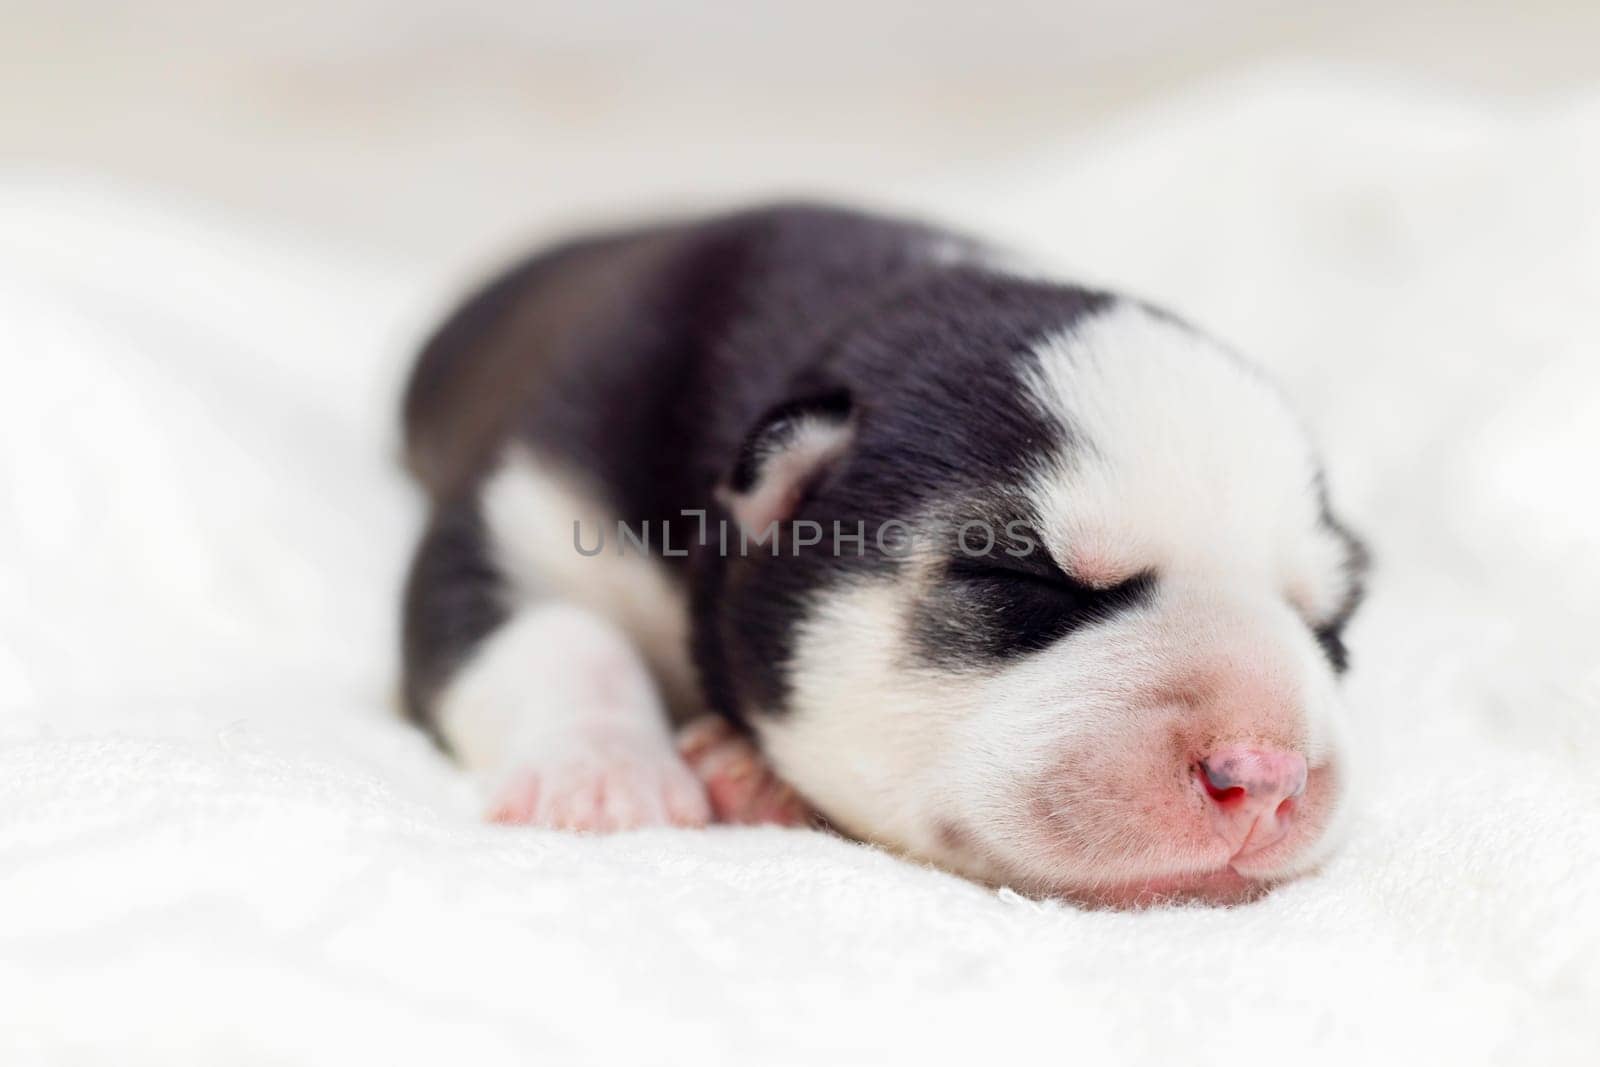 Newborn Puppy Sleeping Peacefully on Soft White Blanket by andreyz